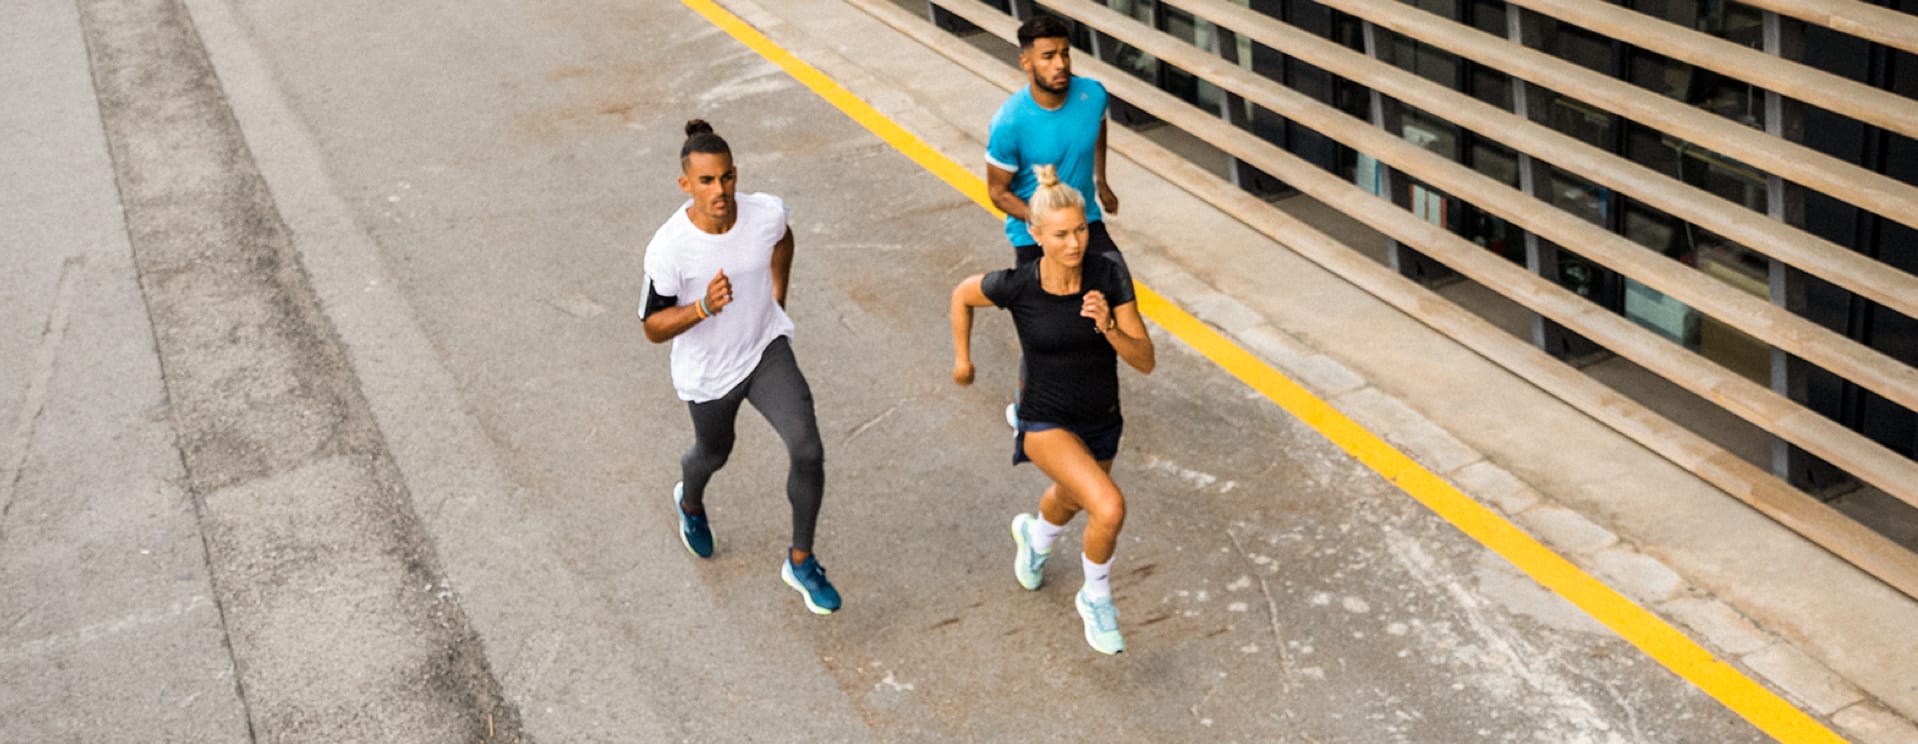 adidas training and running by runtastic